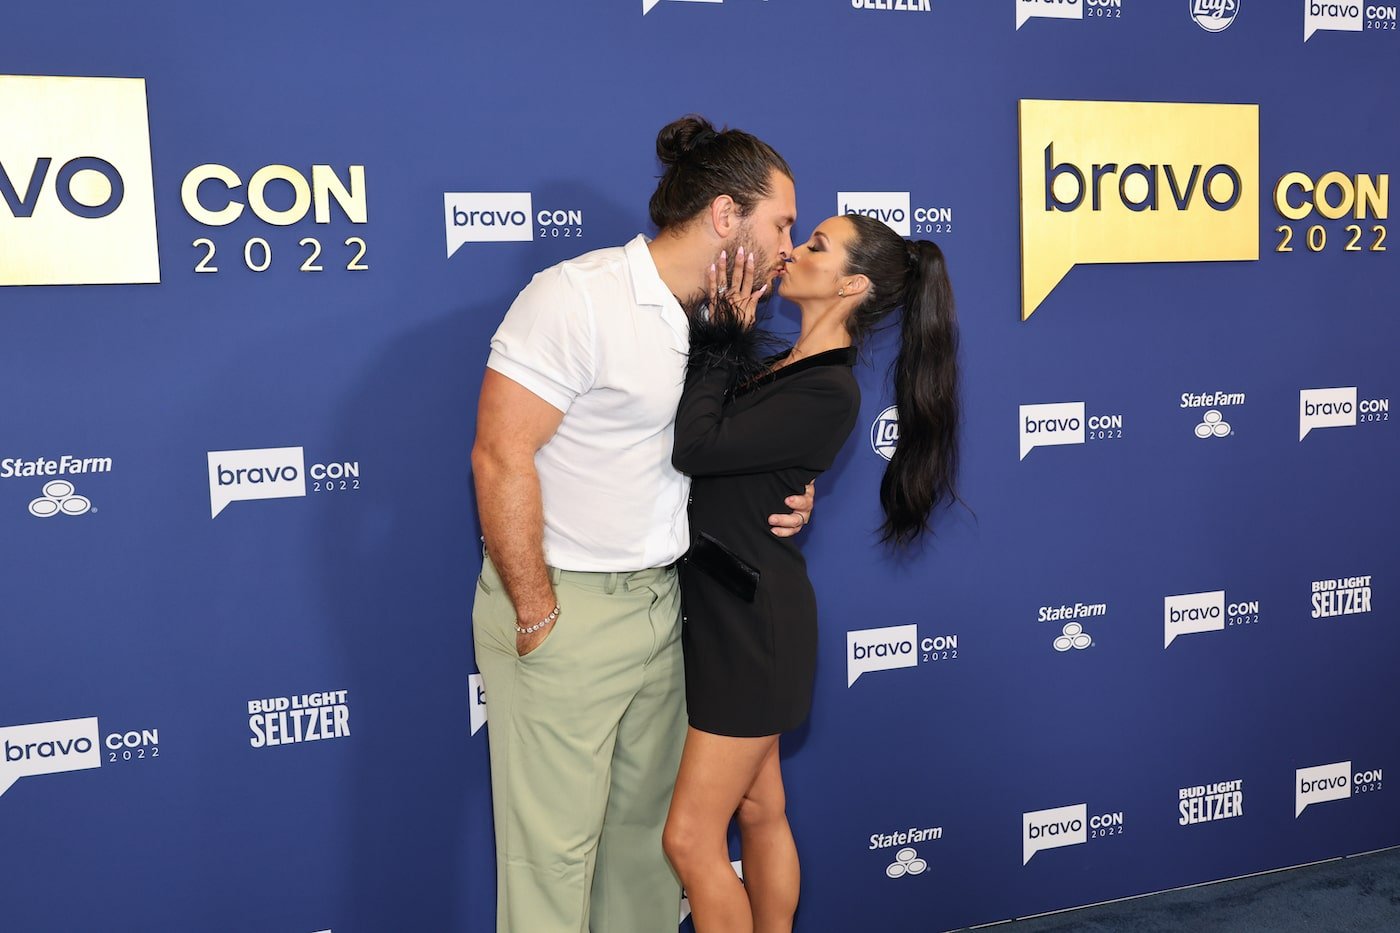 Brock Davies and Scheana Shay from 'Vanderpump Rules' kiss at Bravocon